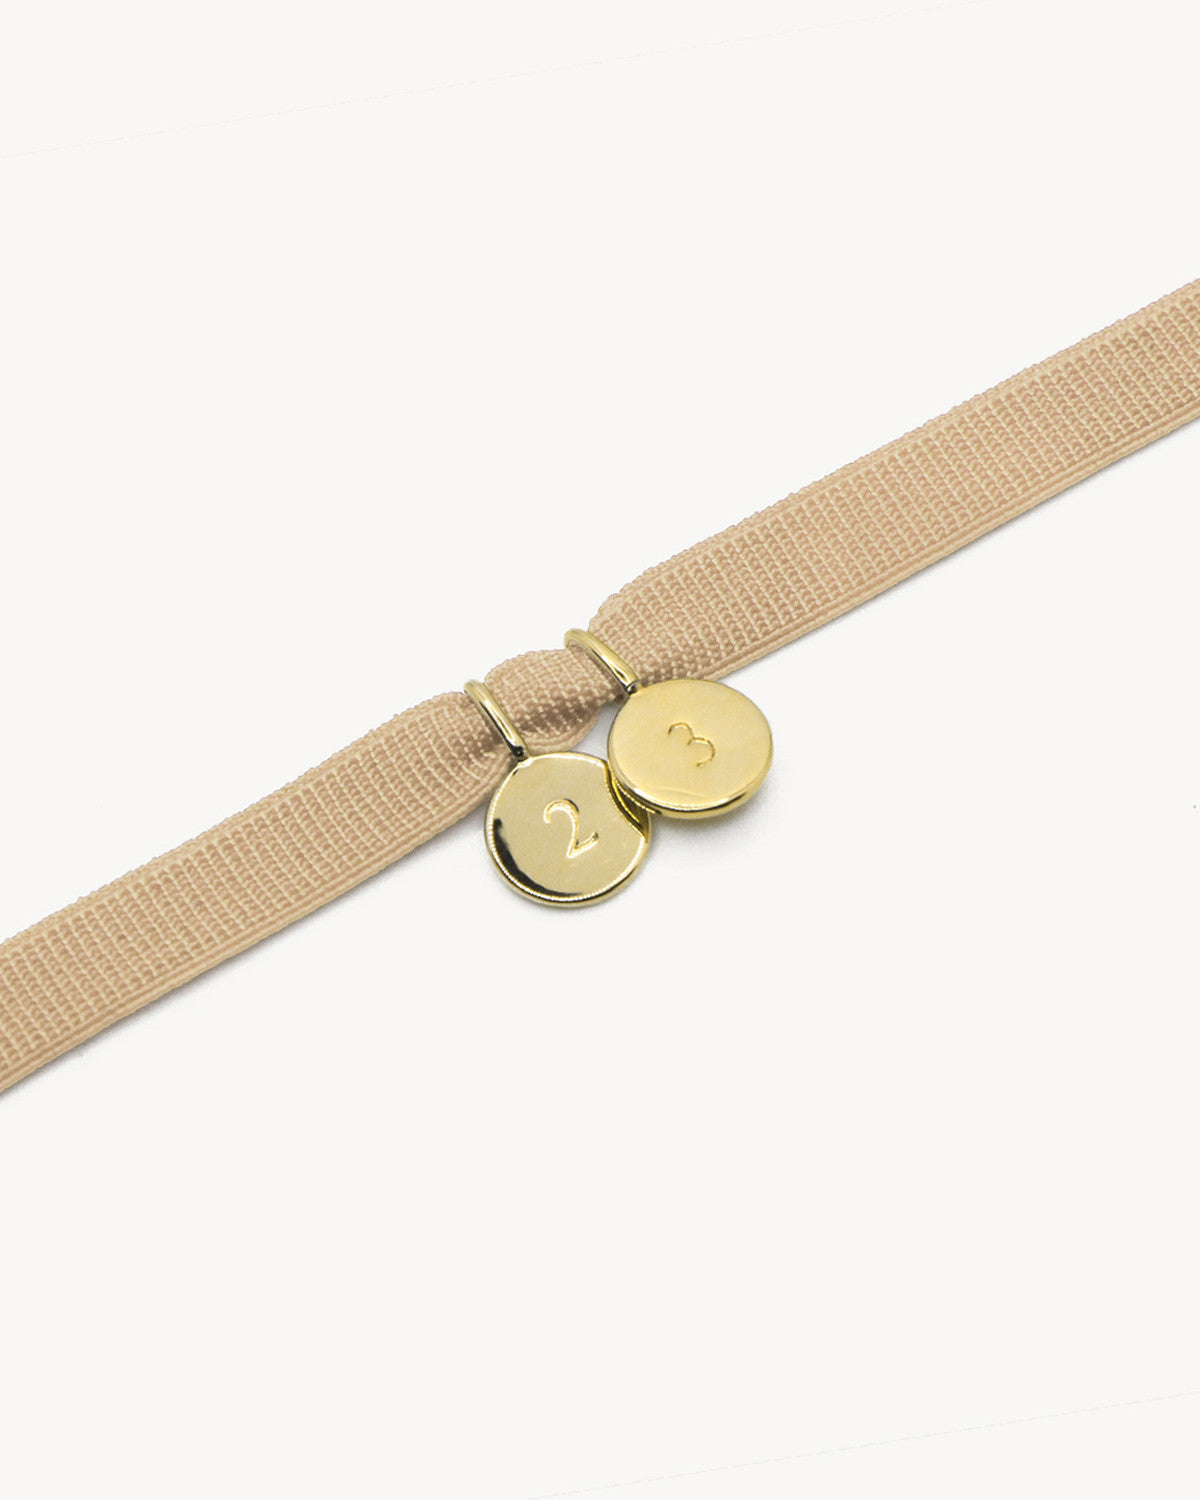 Initials bracelet (ribbon) to compose